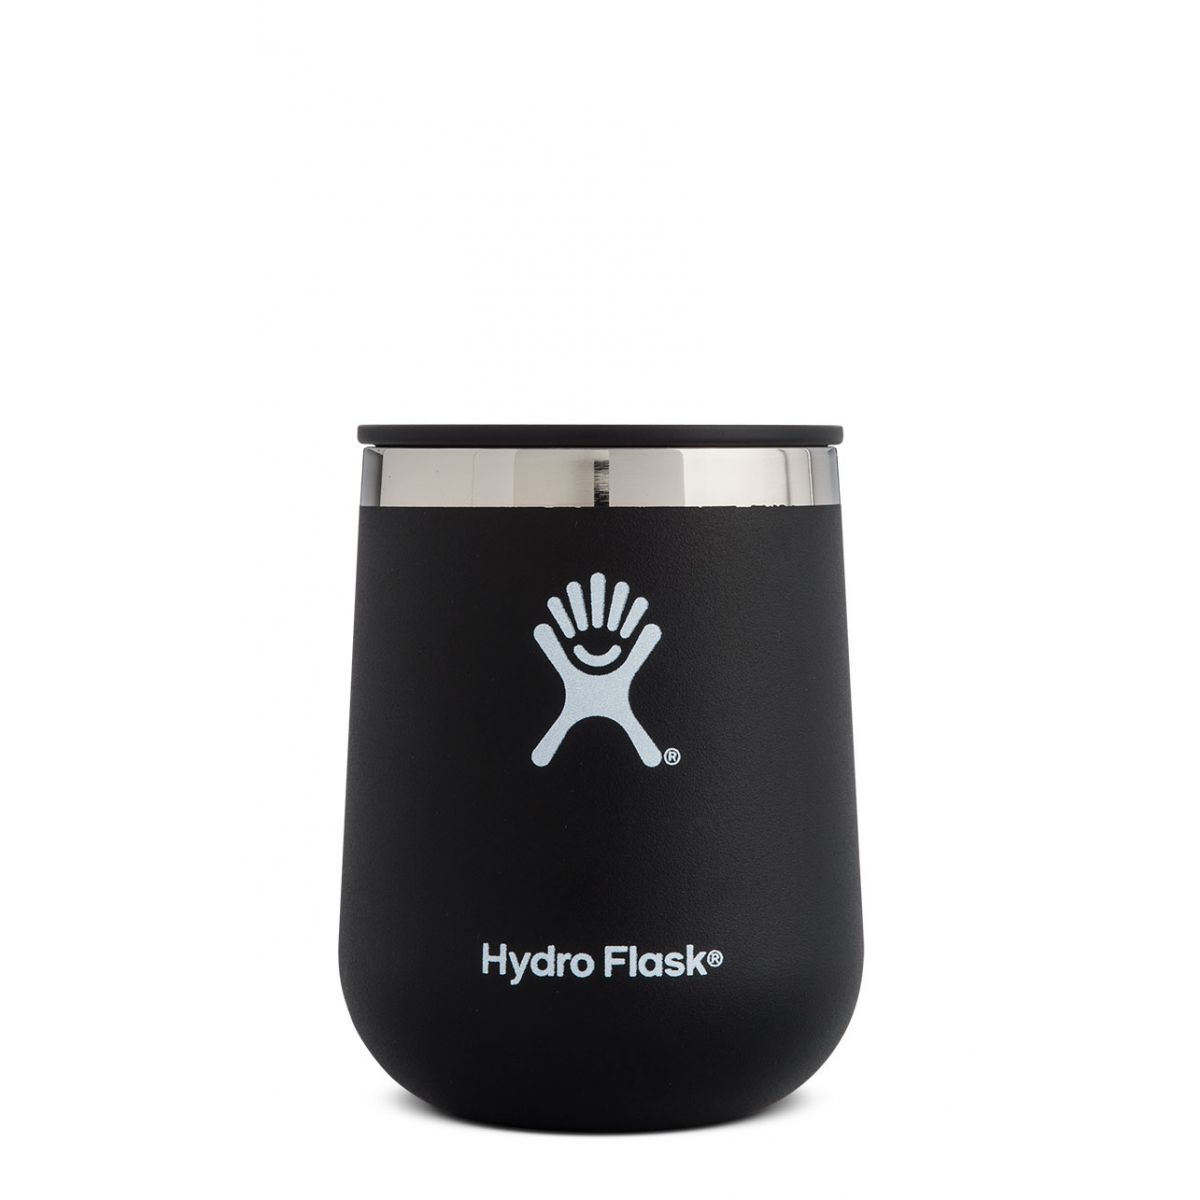 Hydro Flask 10oz Insulated Wine Tumbler.